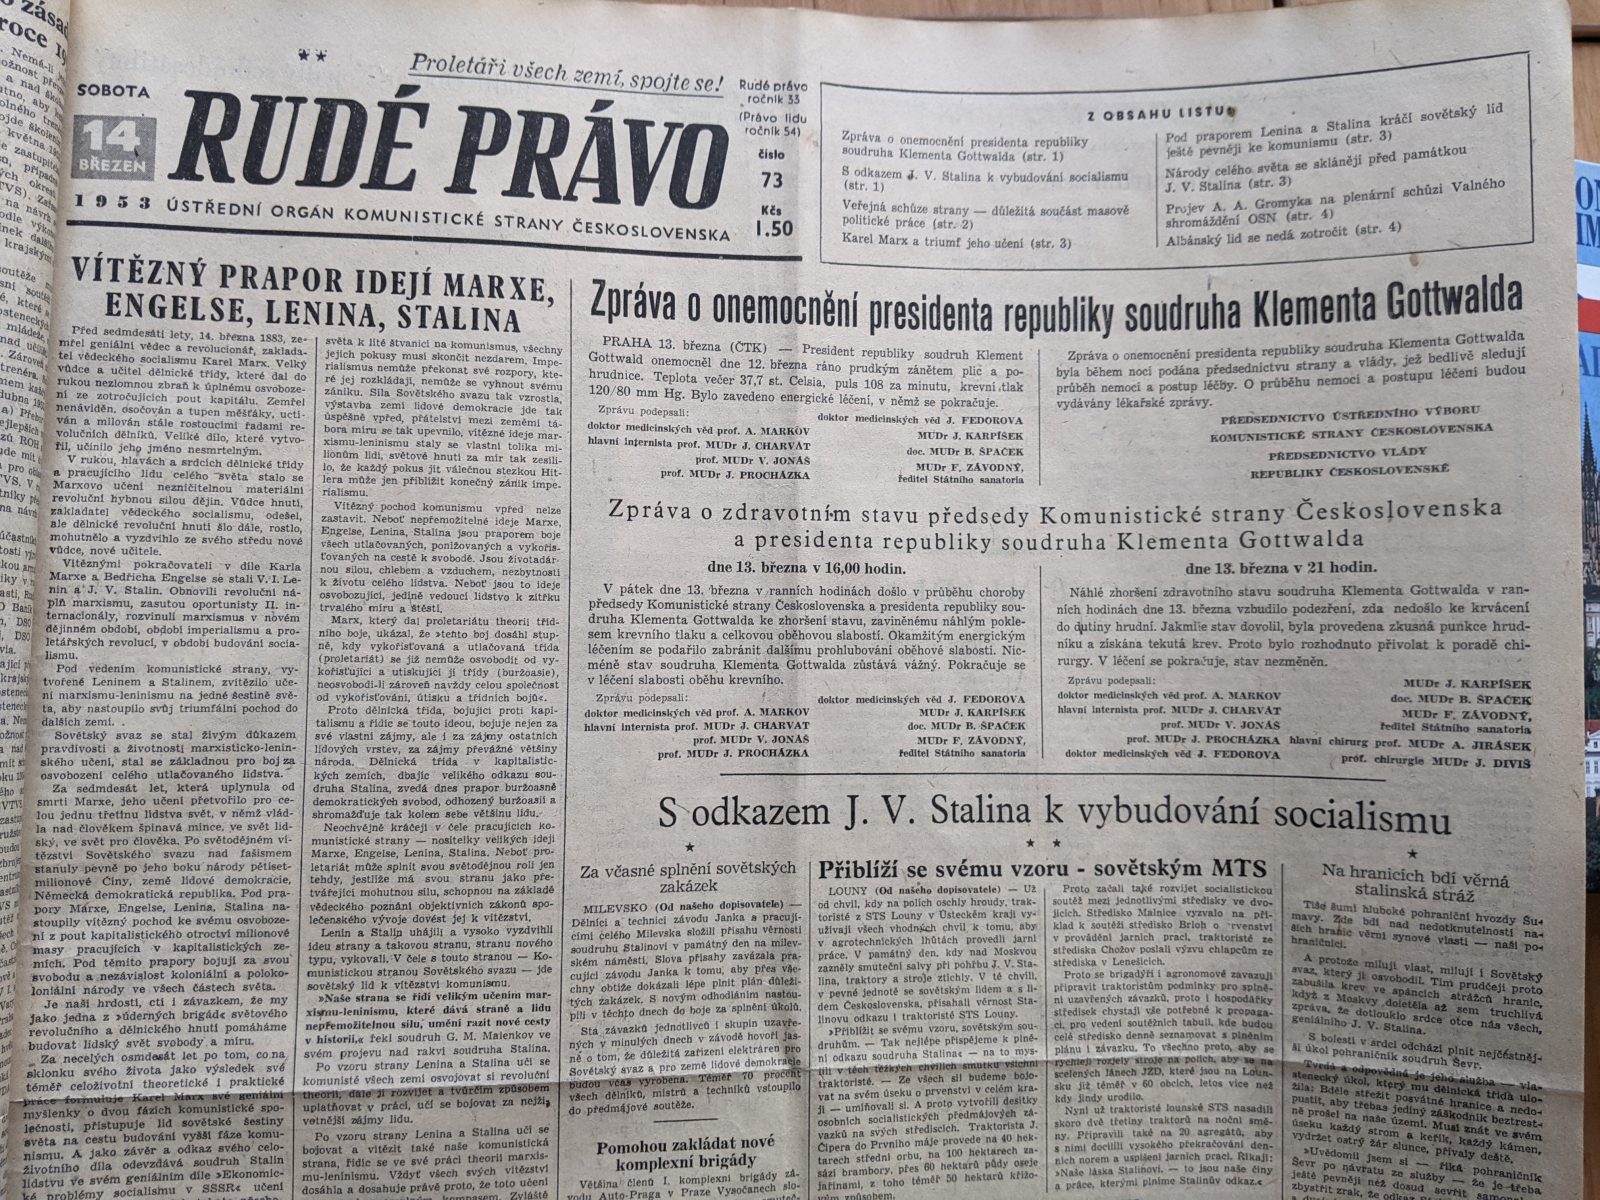 Zpráva o onemocnění presidenta republiky soudruha Klementa Gottwalda, Rudé právo (14. 3. 1953)